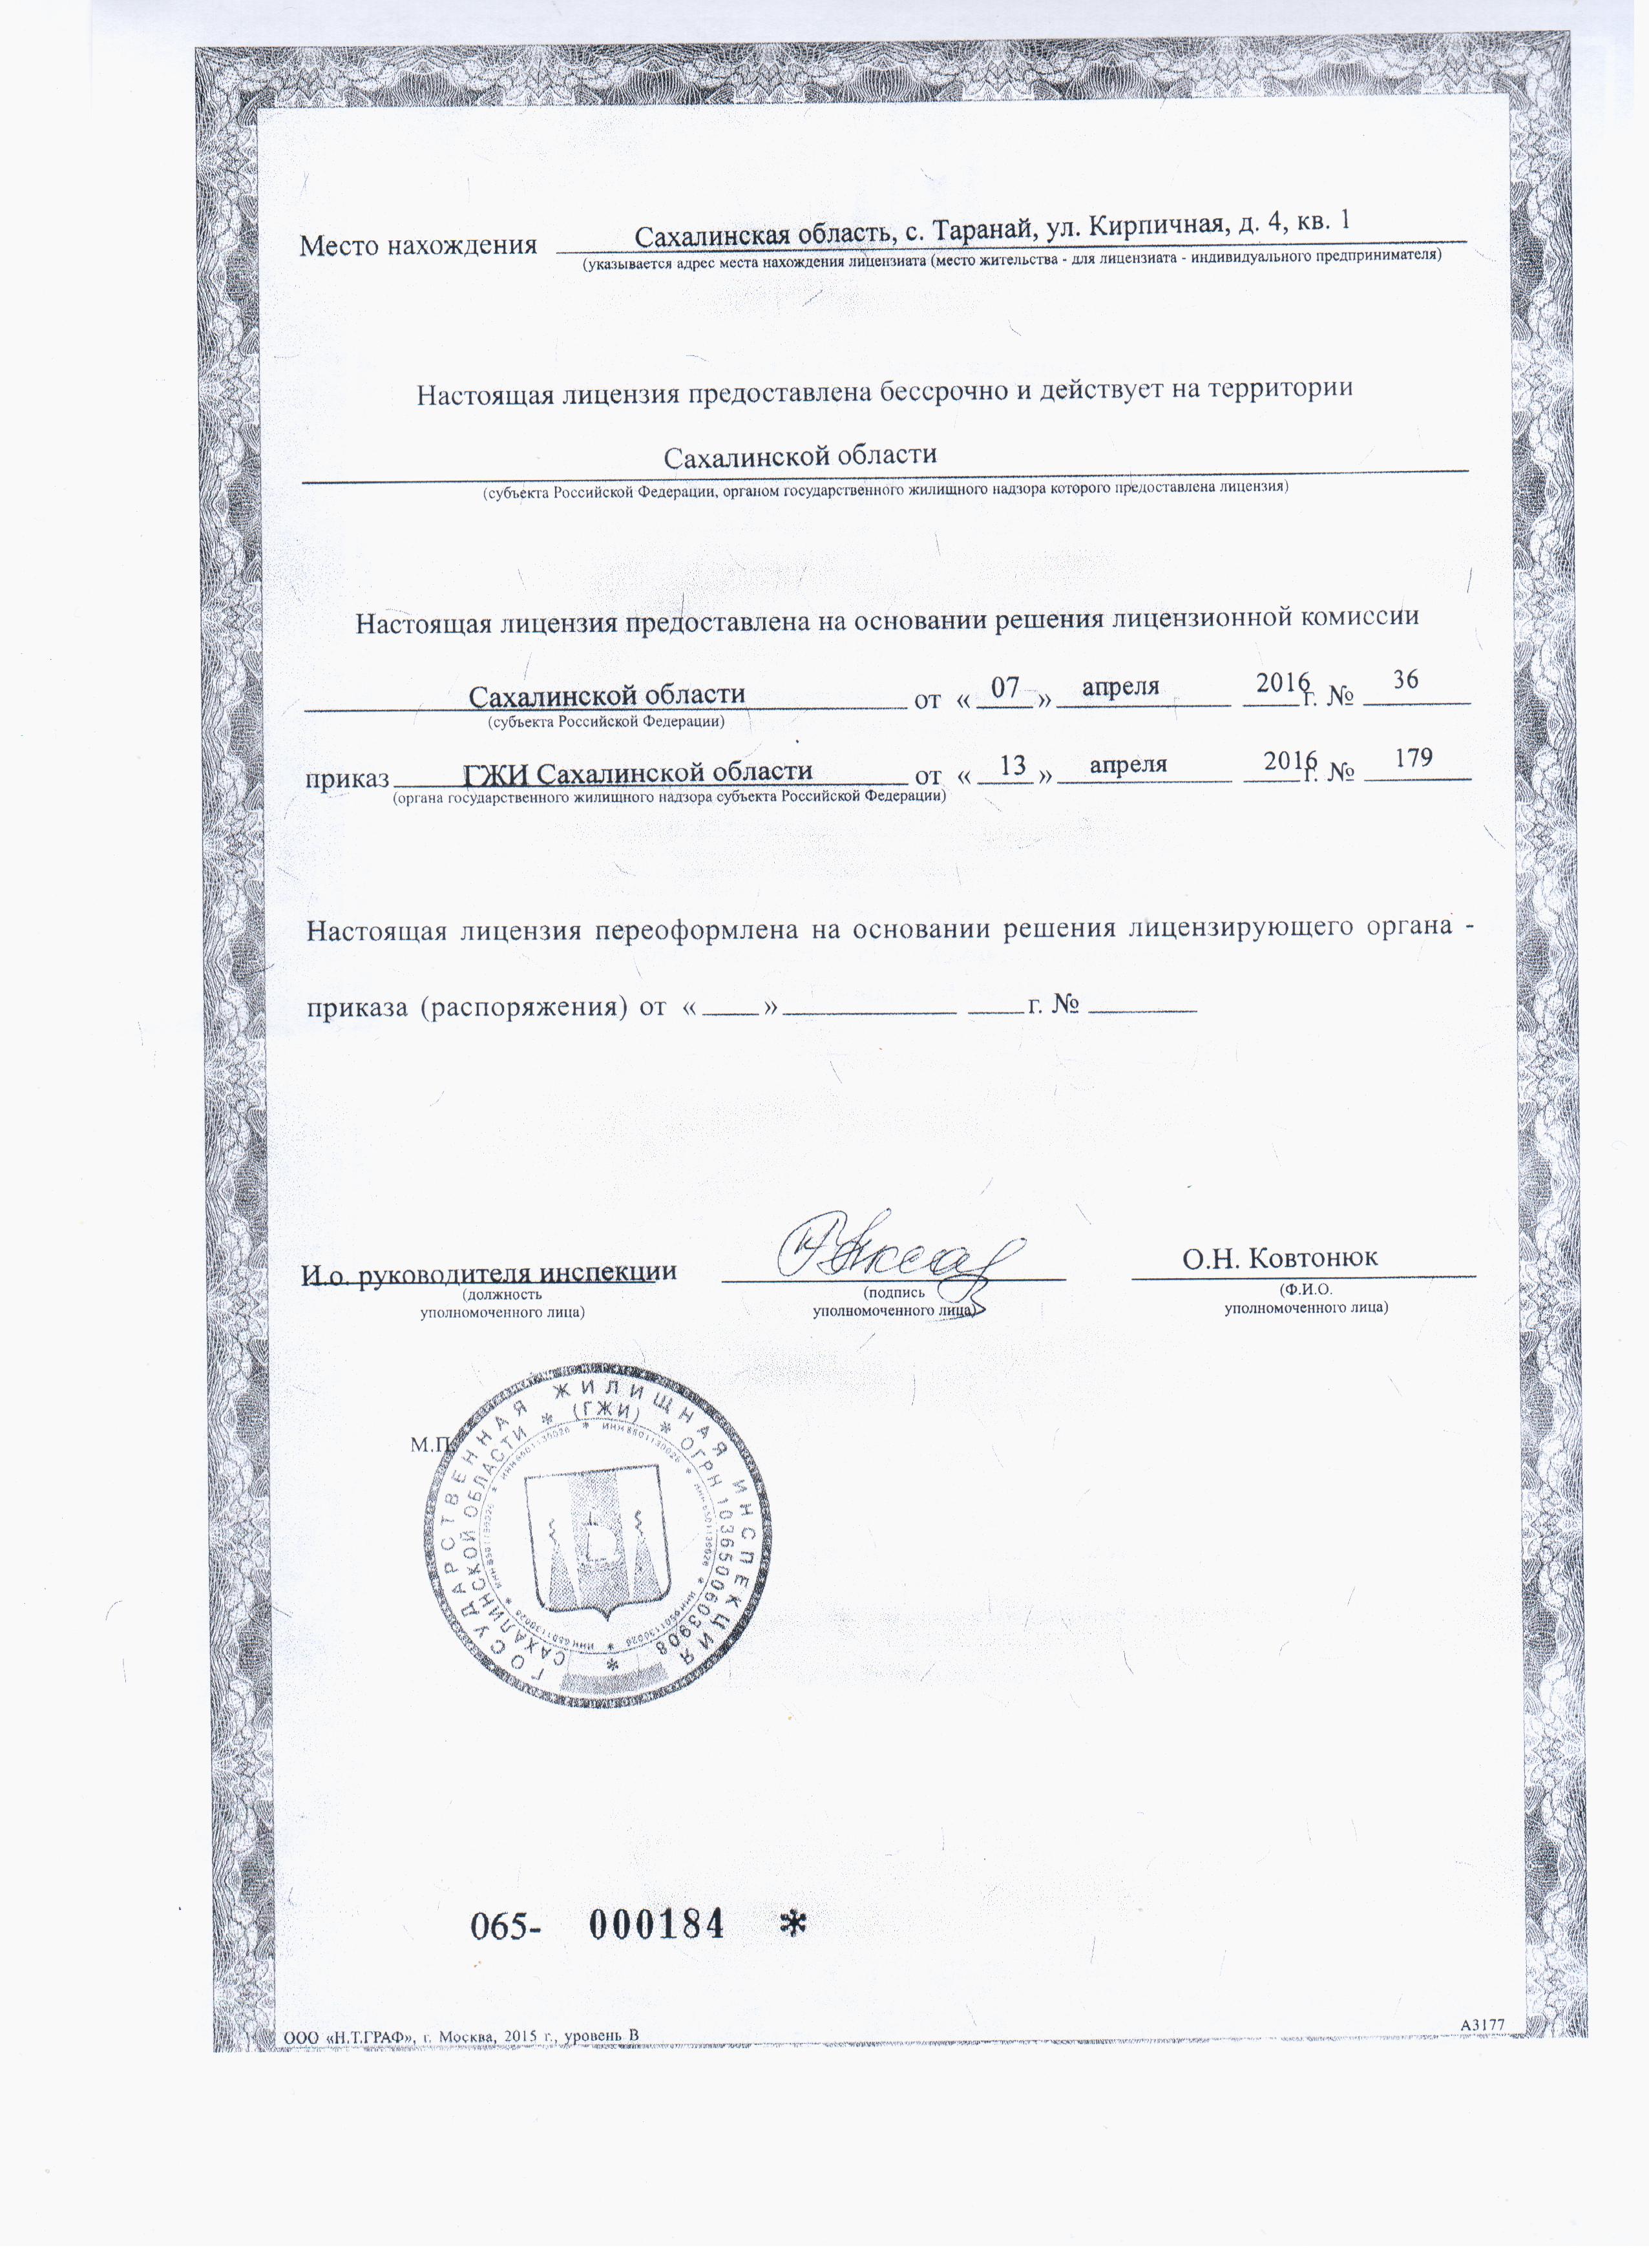 Лицензия на управление МКД №065-000184 от 13.04.2016